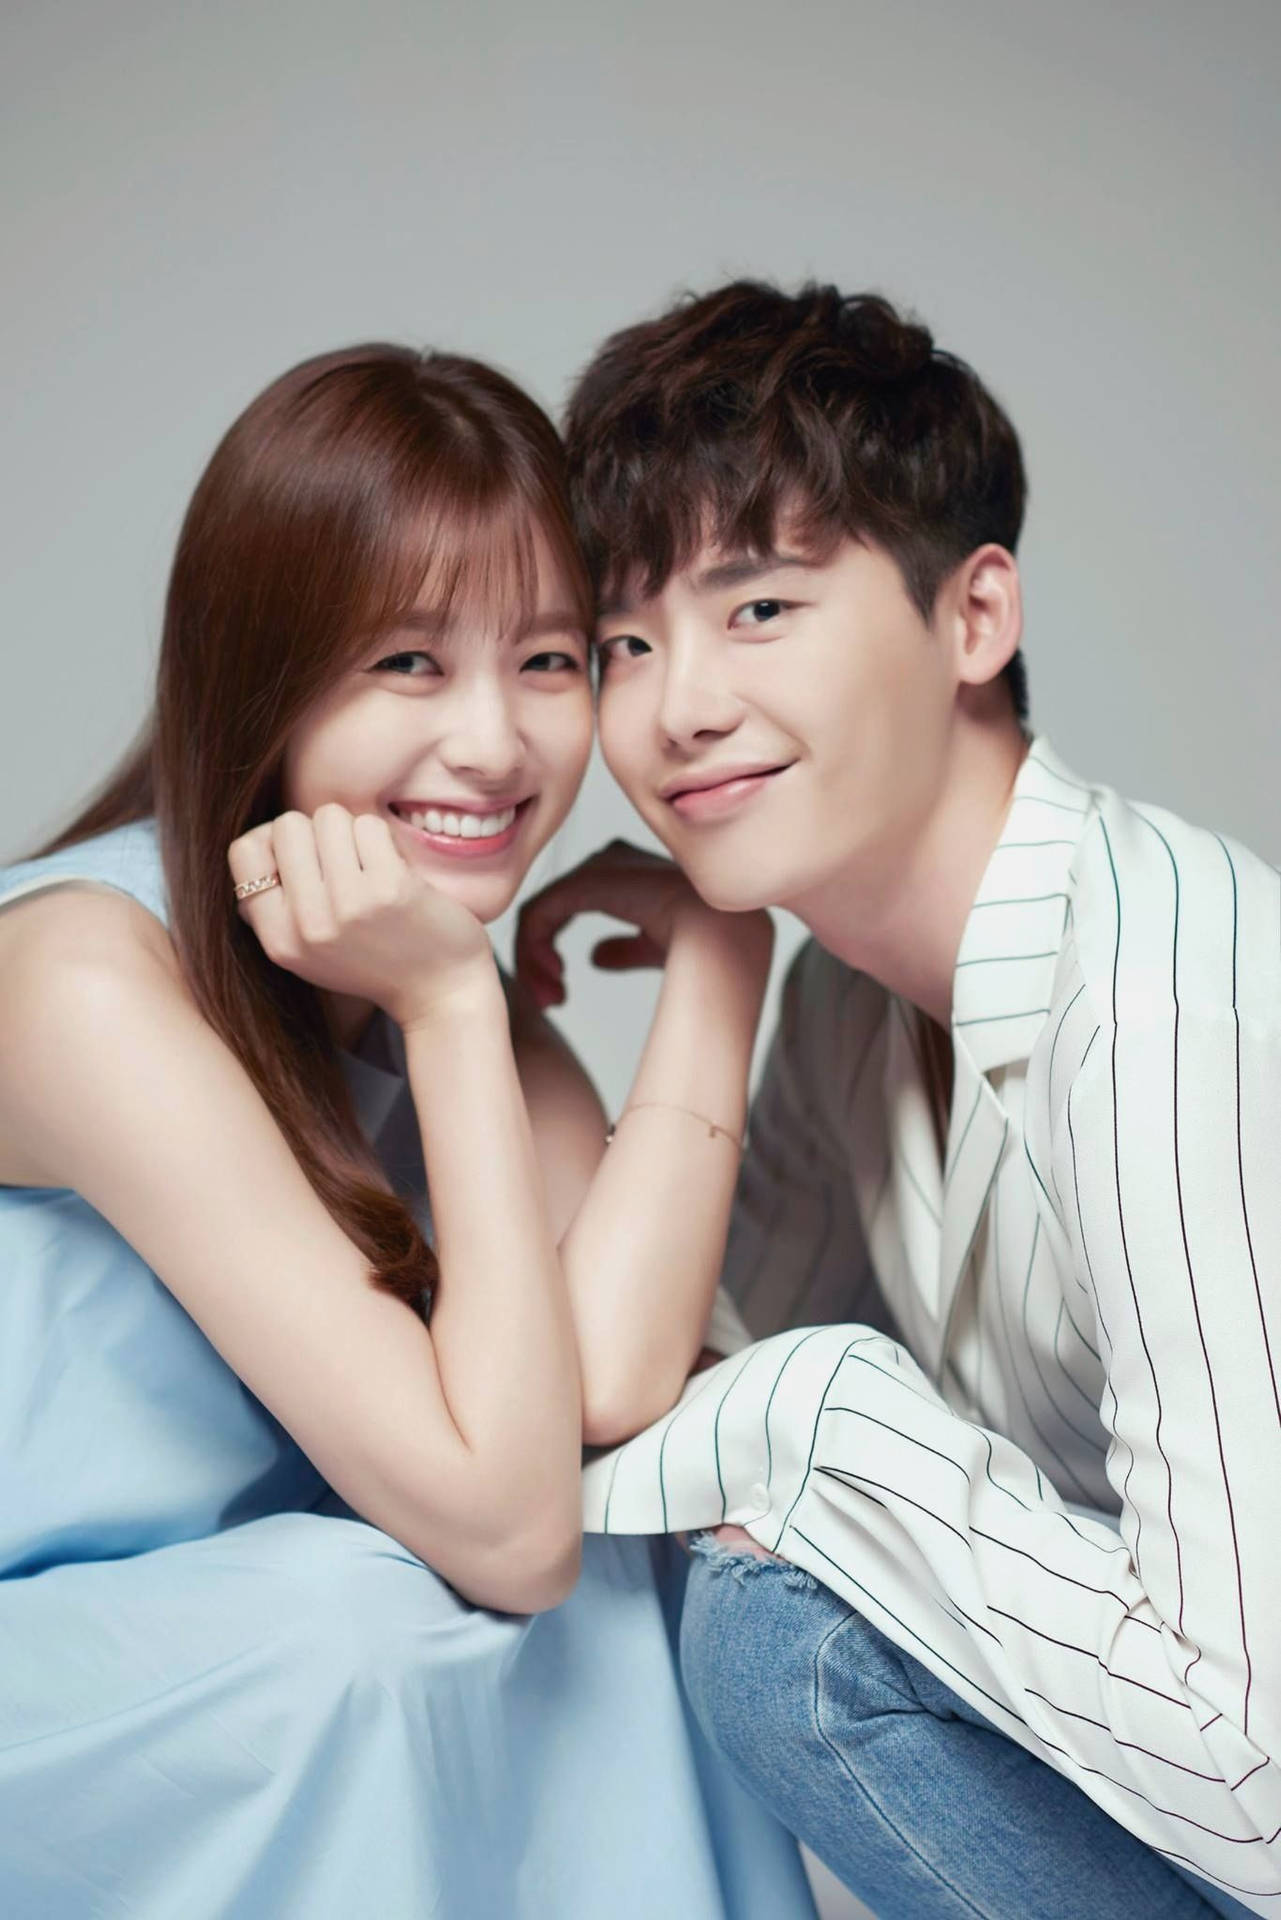 Top 999+ Korean Couple Wallpaper Full HD, 4K Free to Use